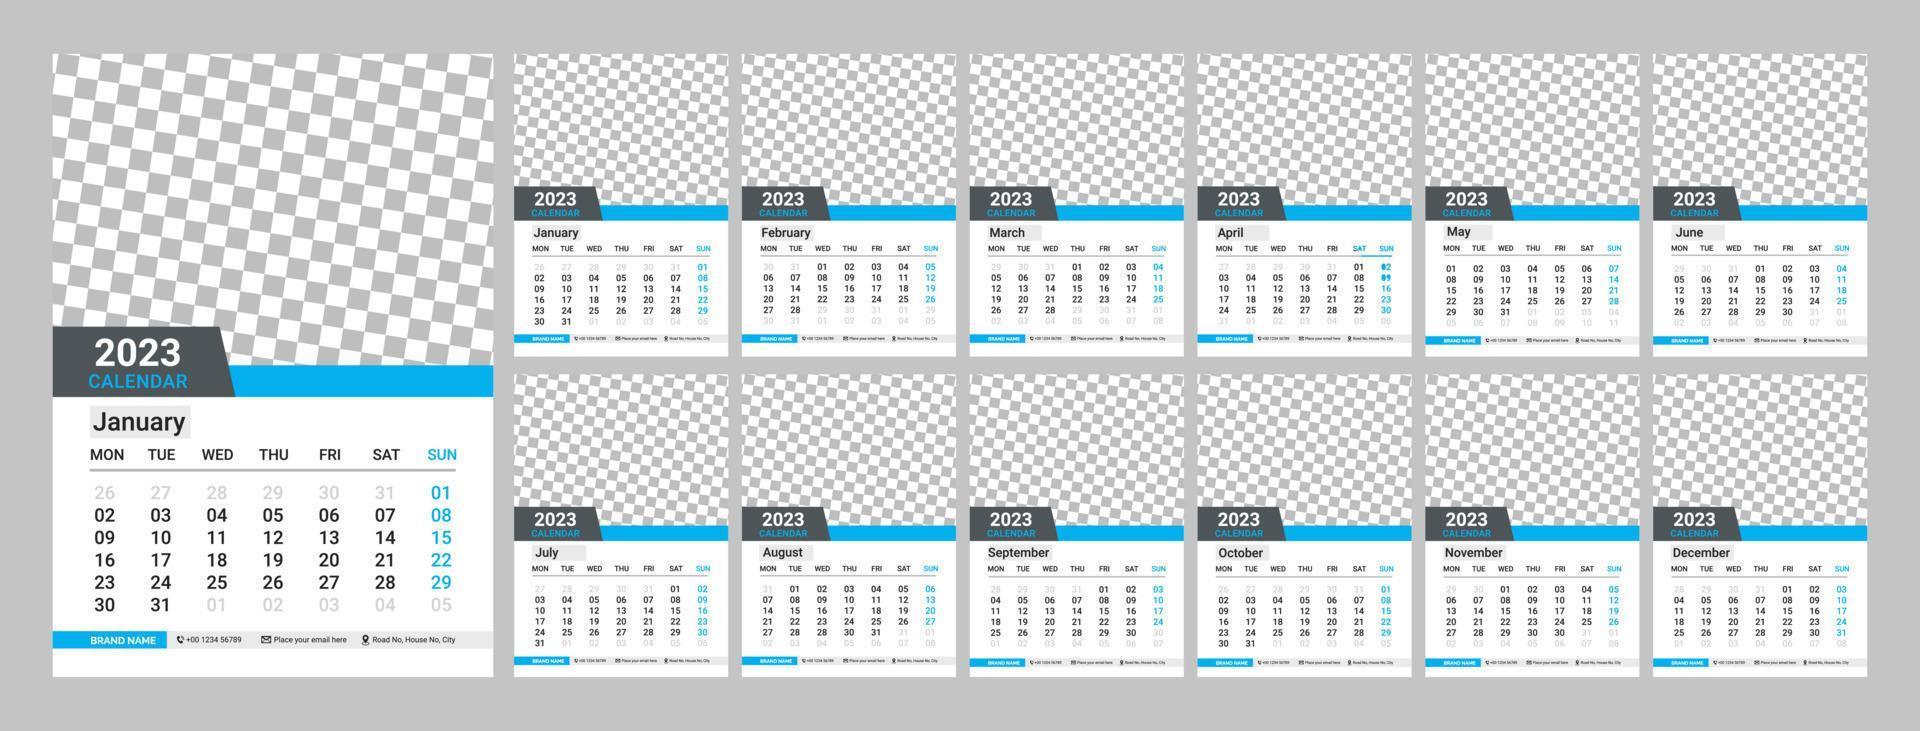 calendario de pared diseño 2023. calendario mensual 2023. 12 meses. plantilla de página de calendario editable vector